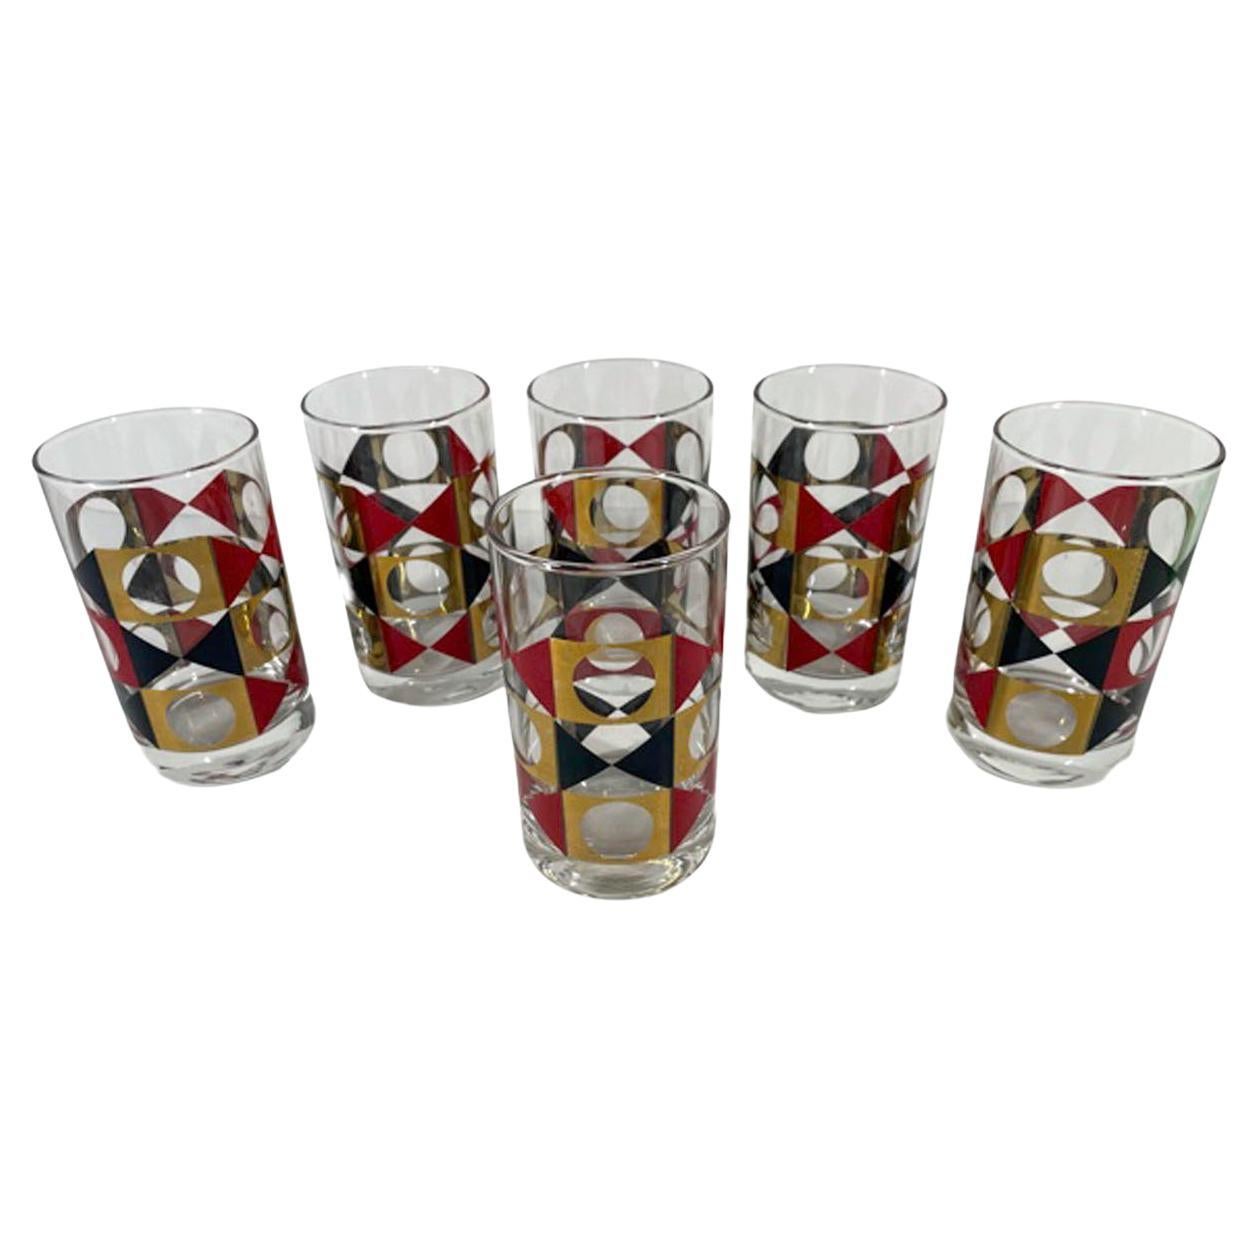 Set of 6 Vintage Geometric Cocktail Glasses in Red & Black Enamel with 22k Gold